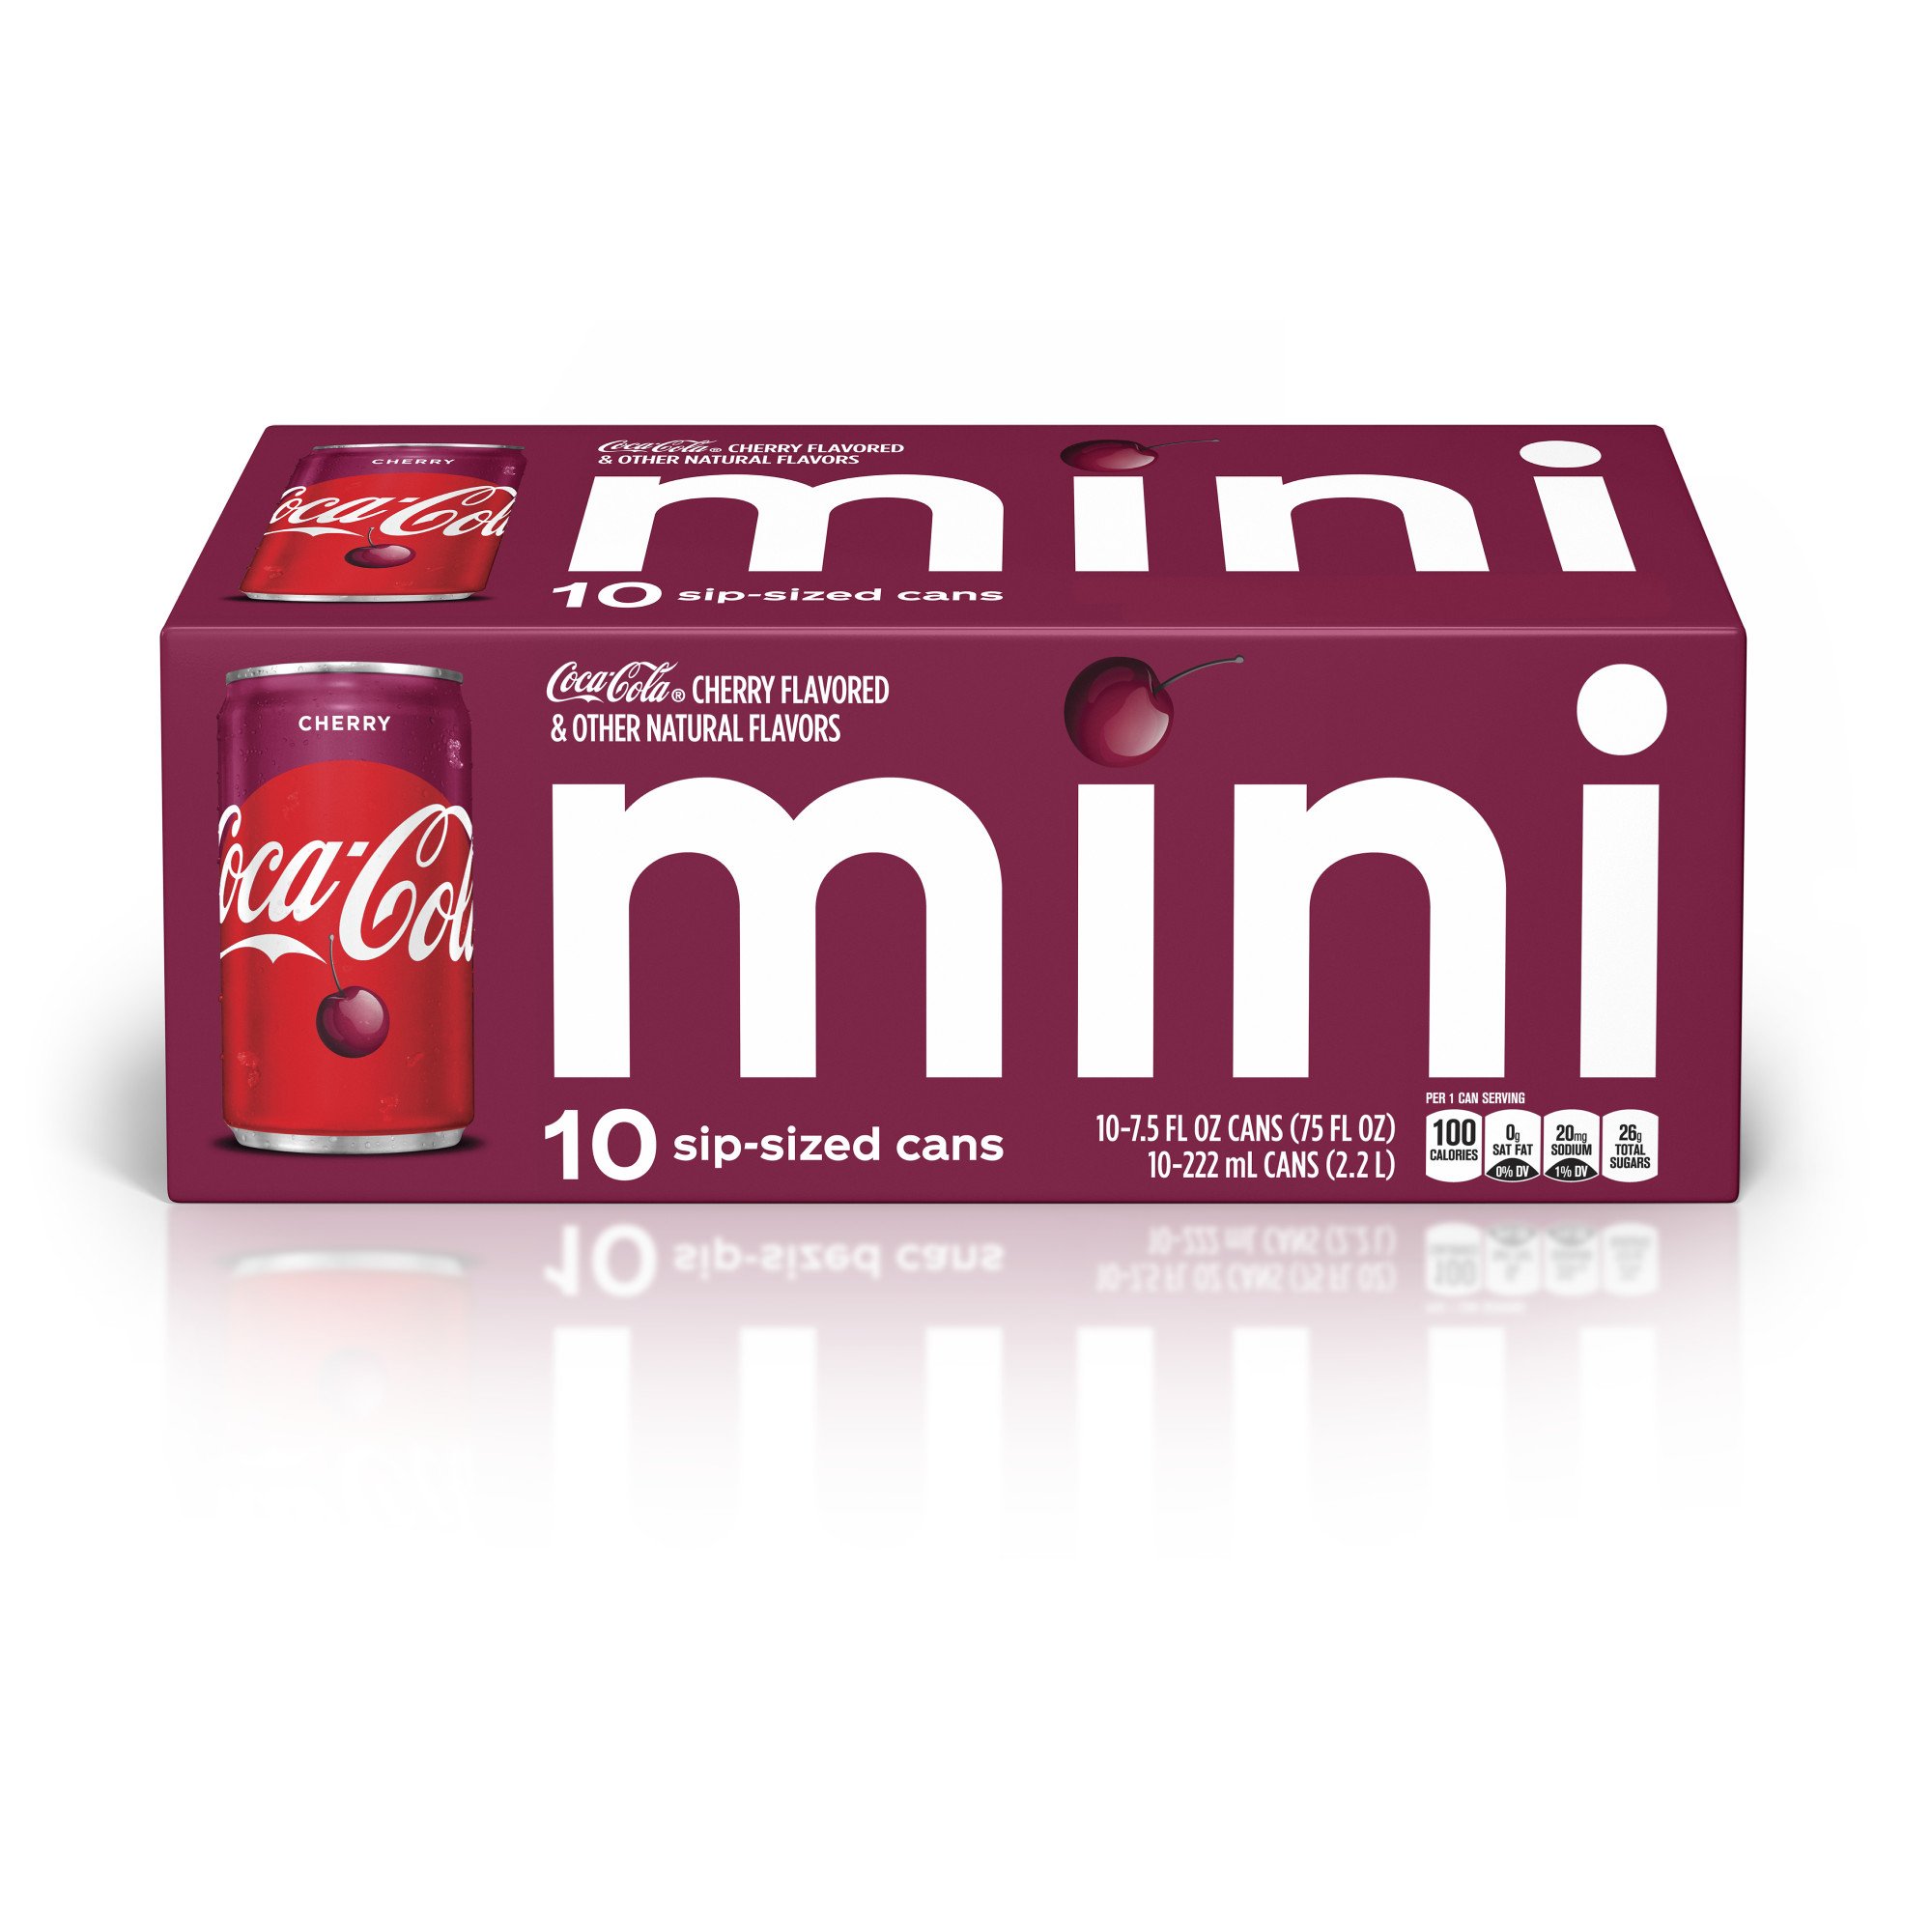 Coca-Cola Cherry Coke 7.5 oz Cans - Shop Soda at H-E-B